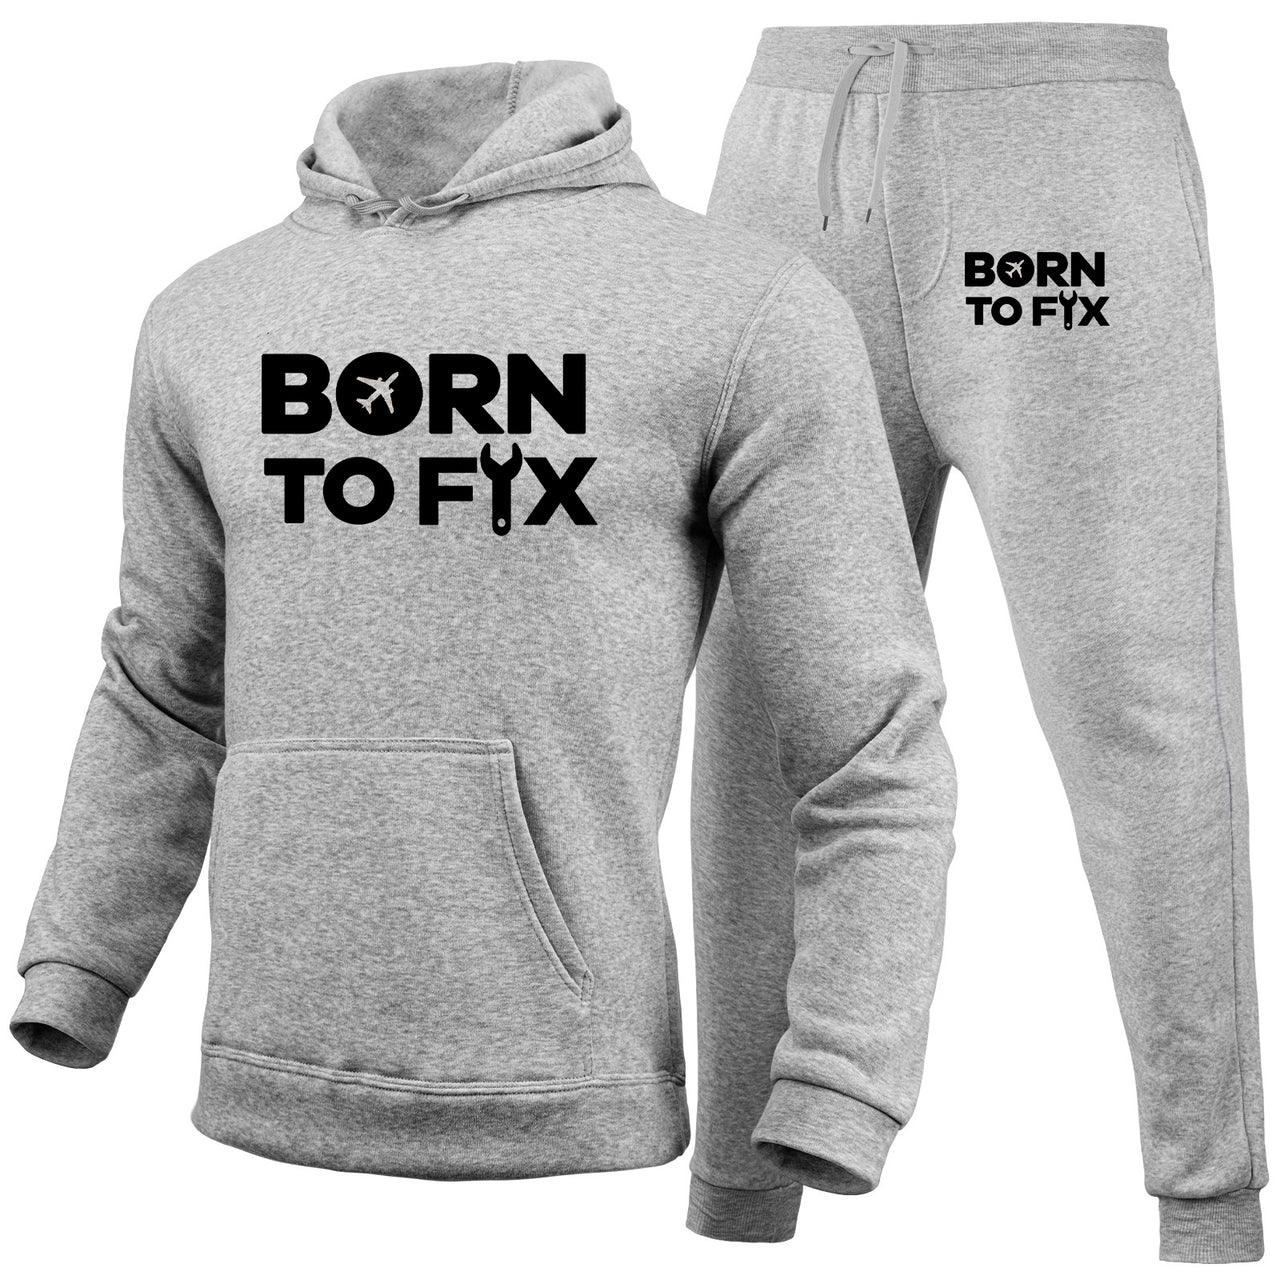 Born To Fix Airplanes Designed Hoodies & Sweatpants Set